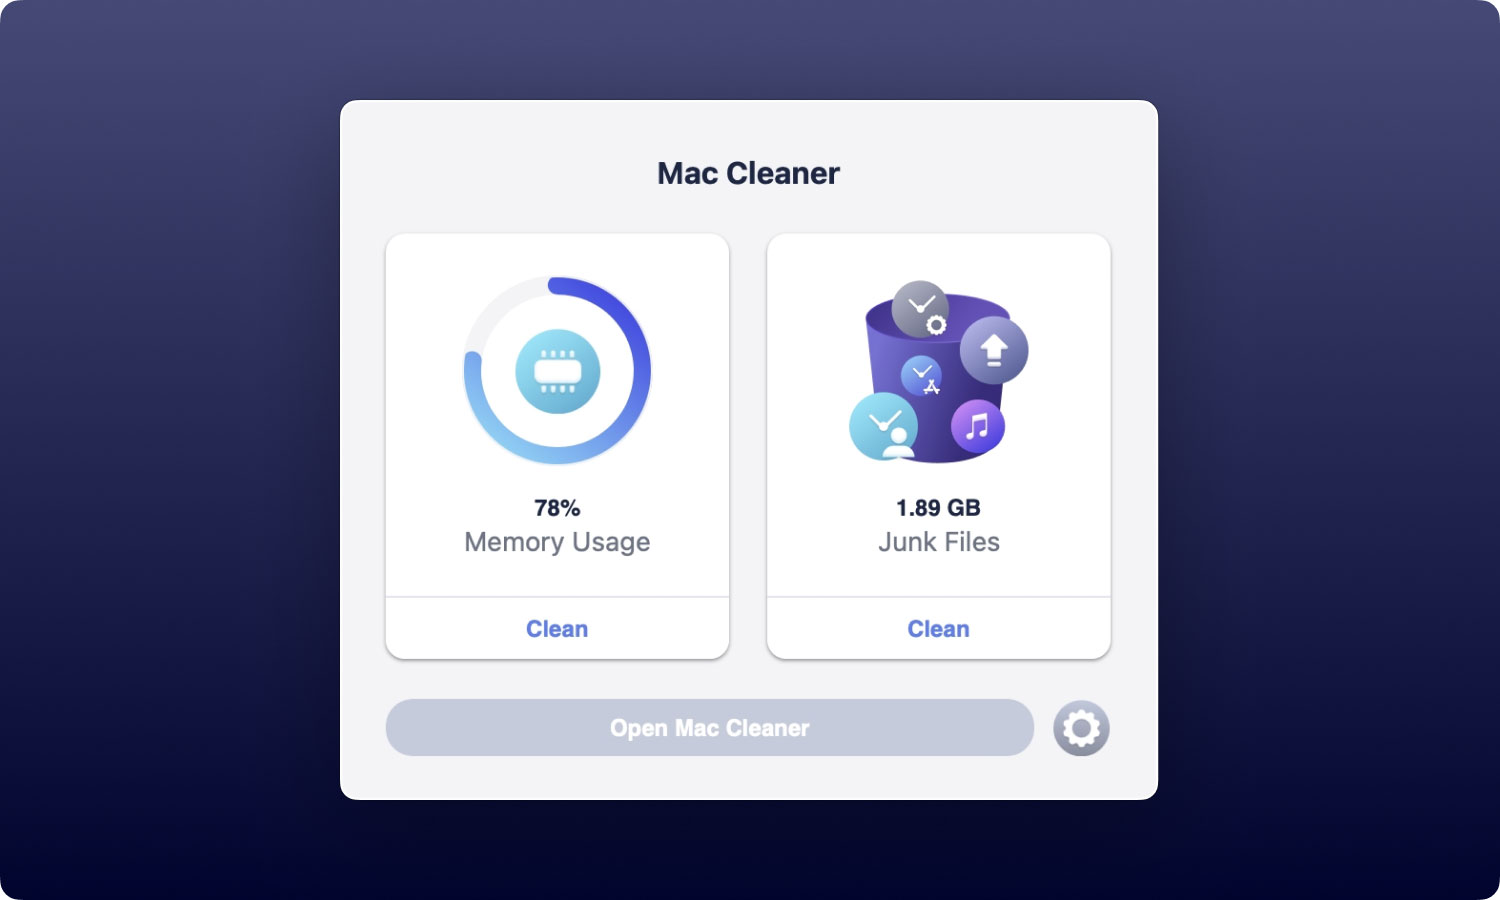 Start Mac Cleaner